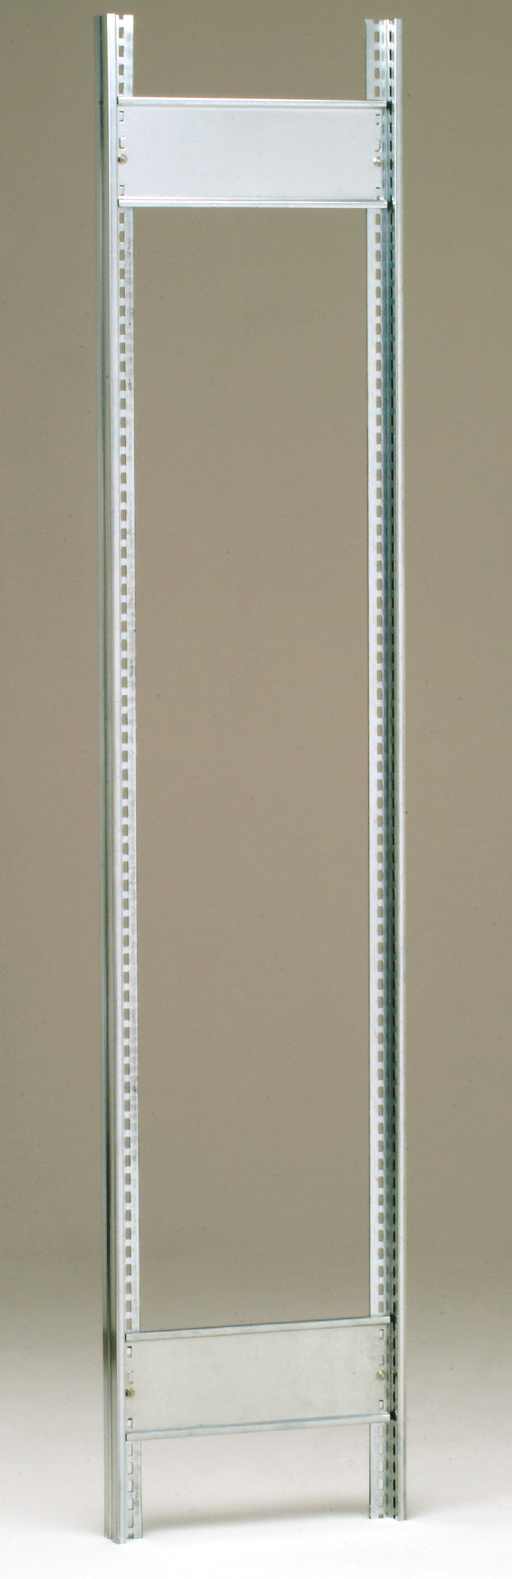 Regalwerk BERT Lagerregal Regal-Rahmen 2000 x 300 mm